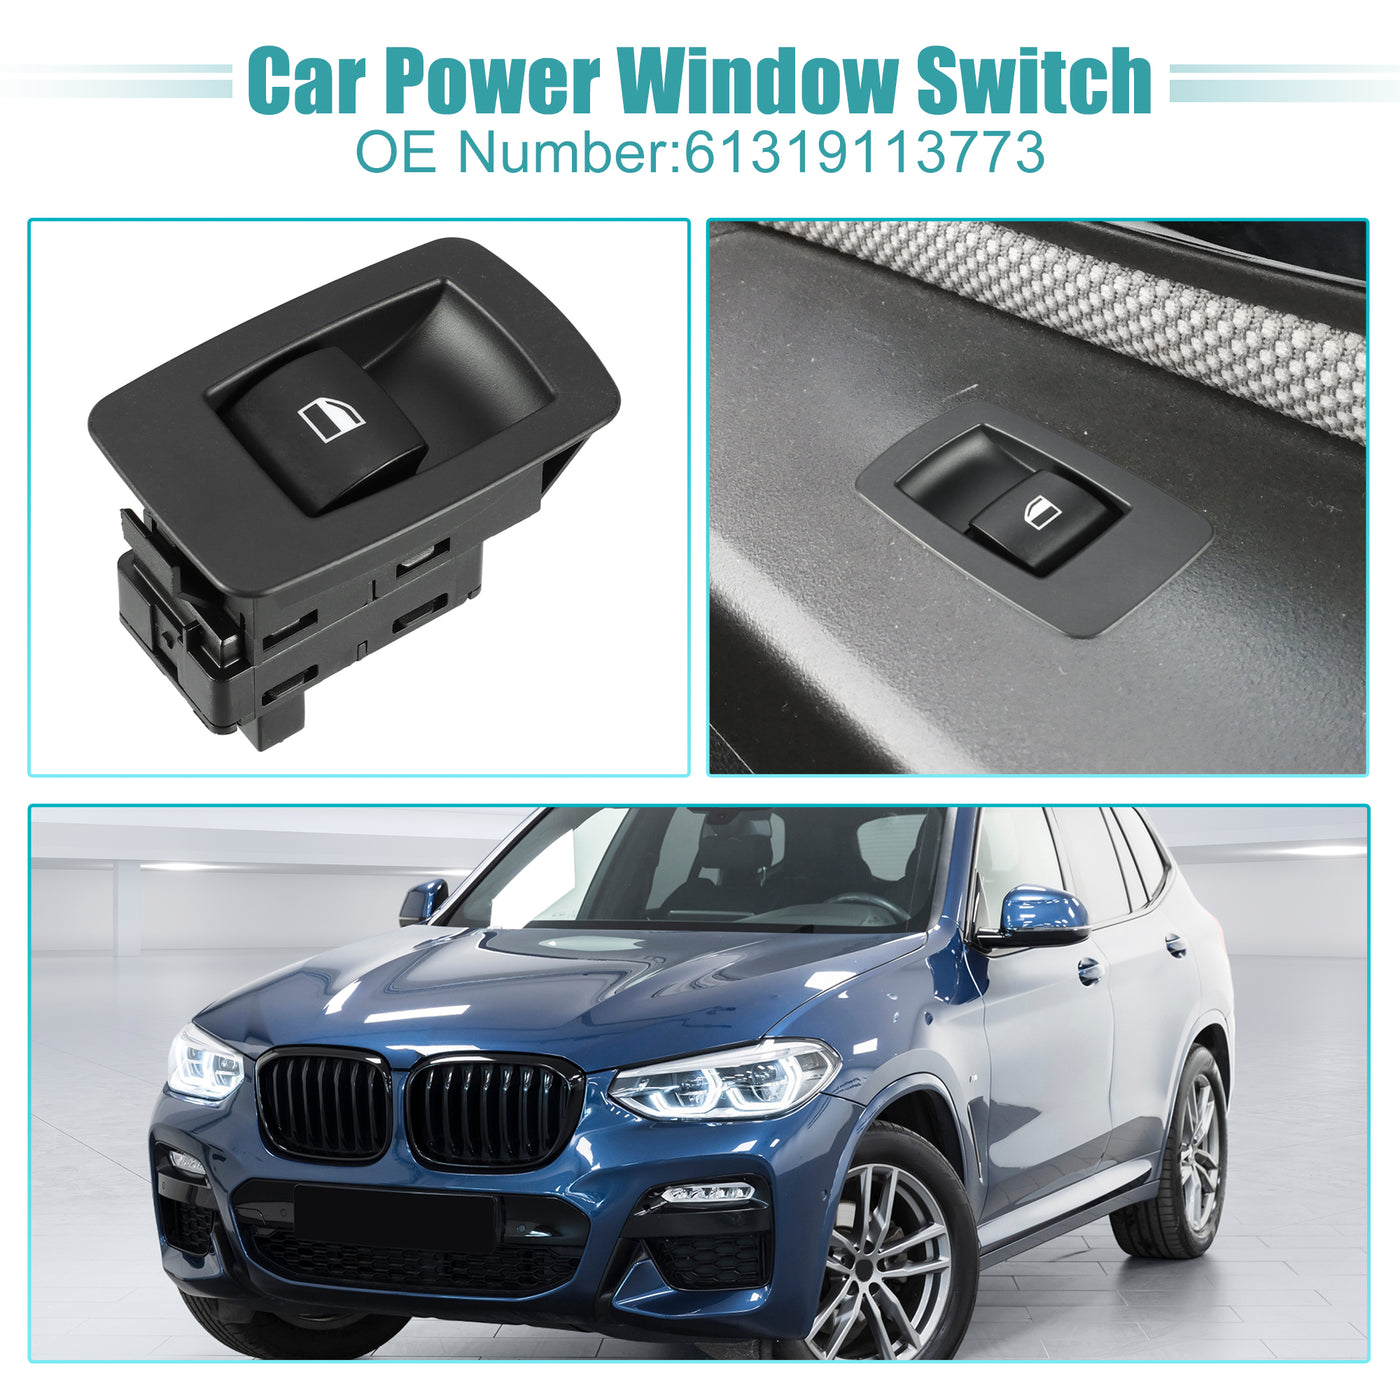 ACROPIX Power Window Switch Window Control Switch Fit for BMW 528i 2008-2010 No.61319113773 - Pack of 1